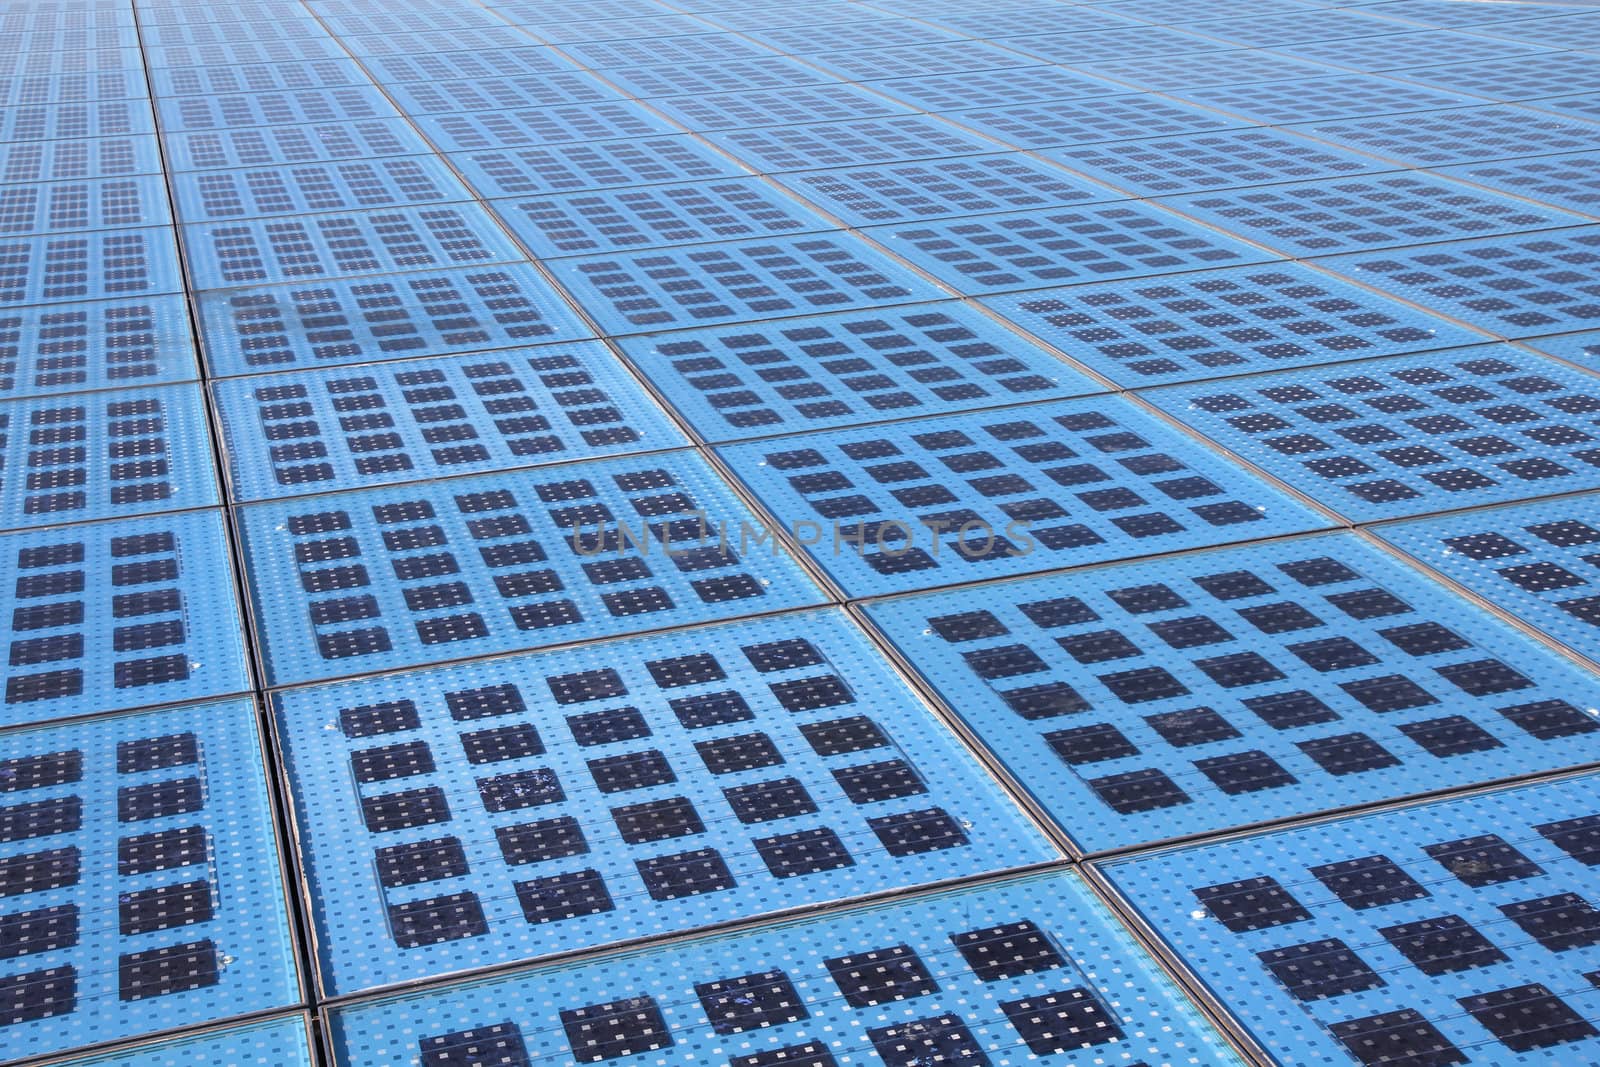 Solar panels by tupungato